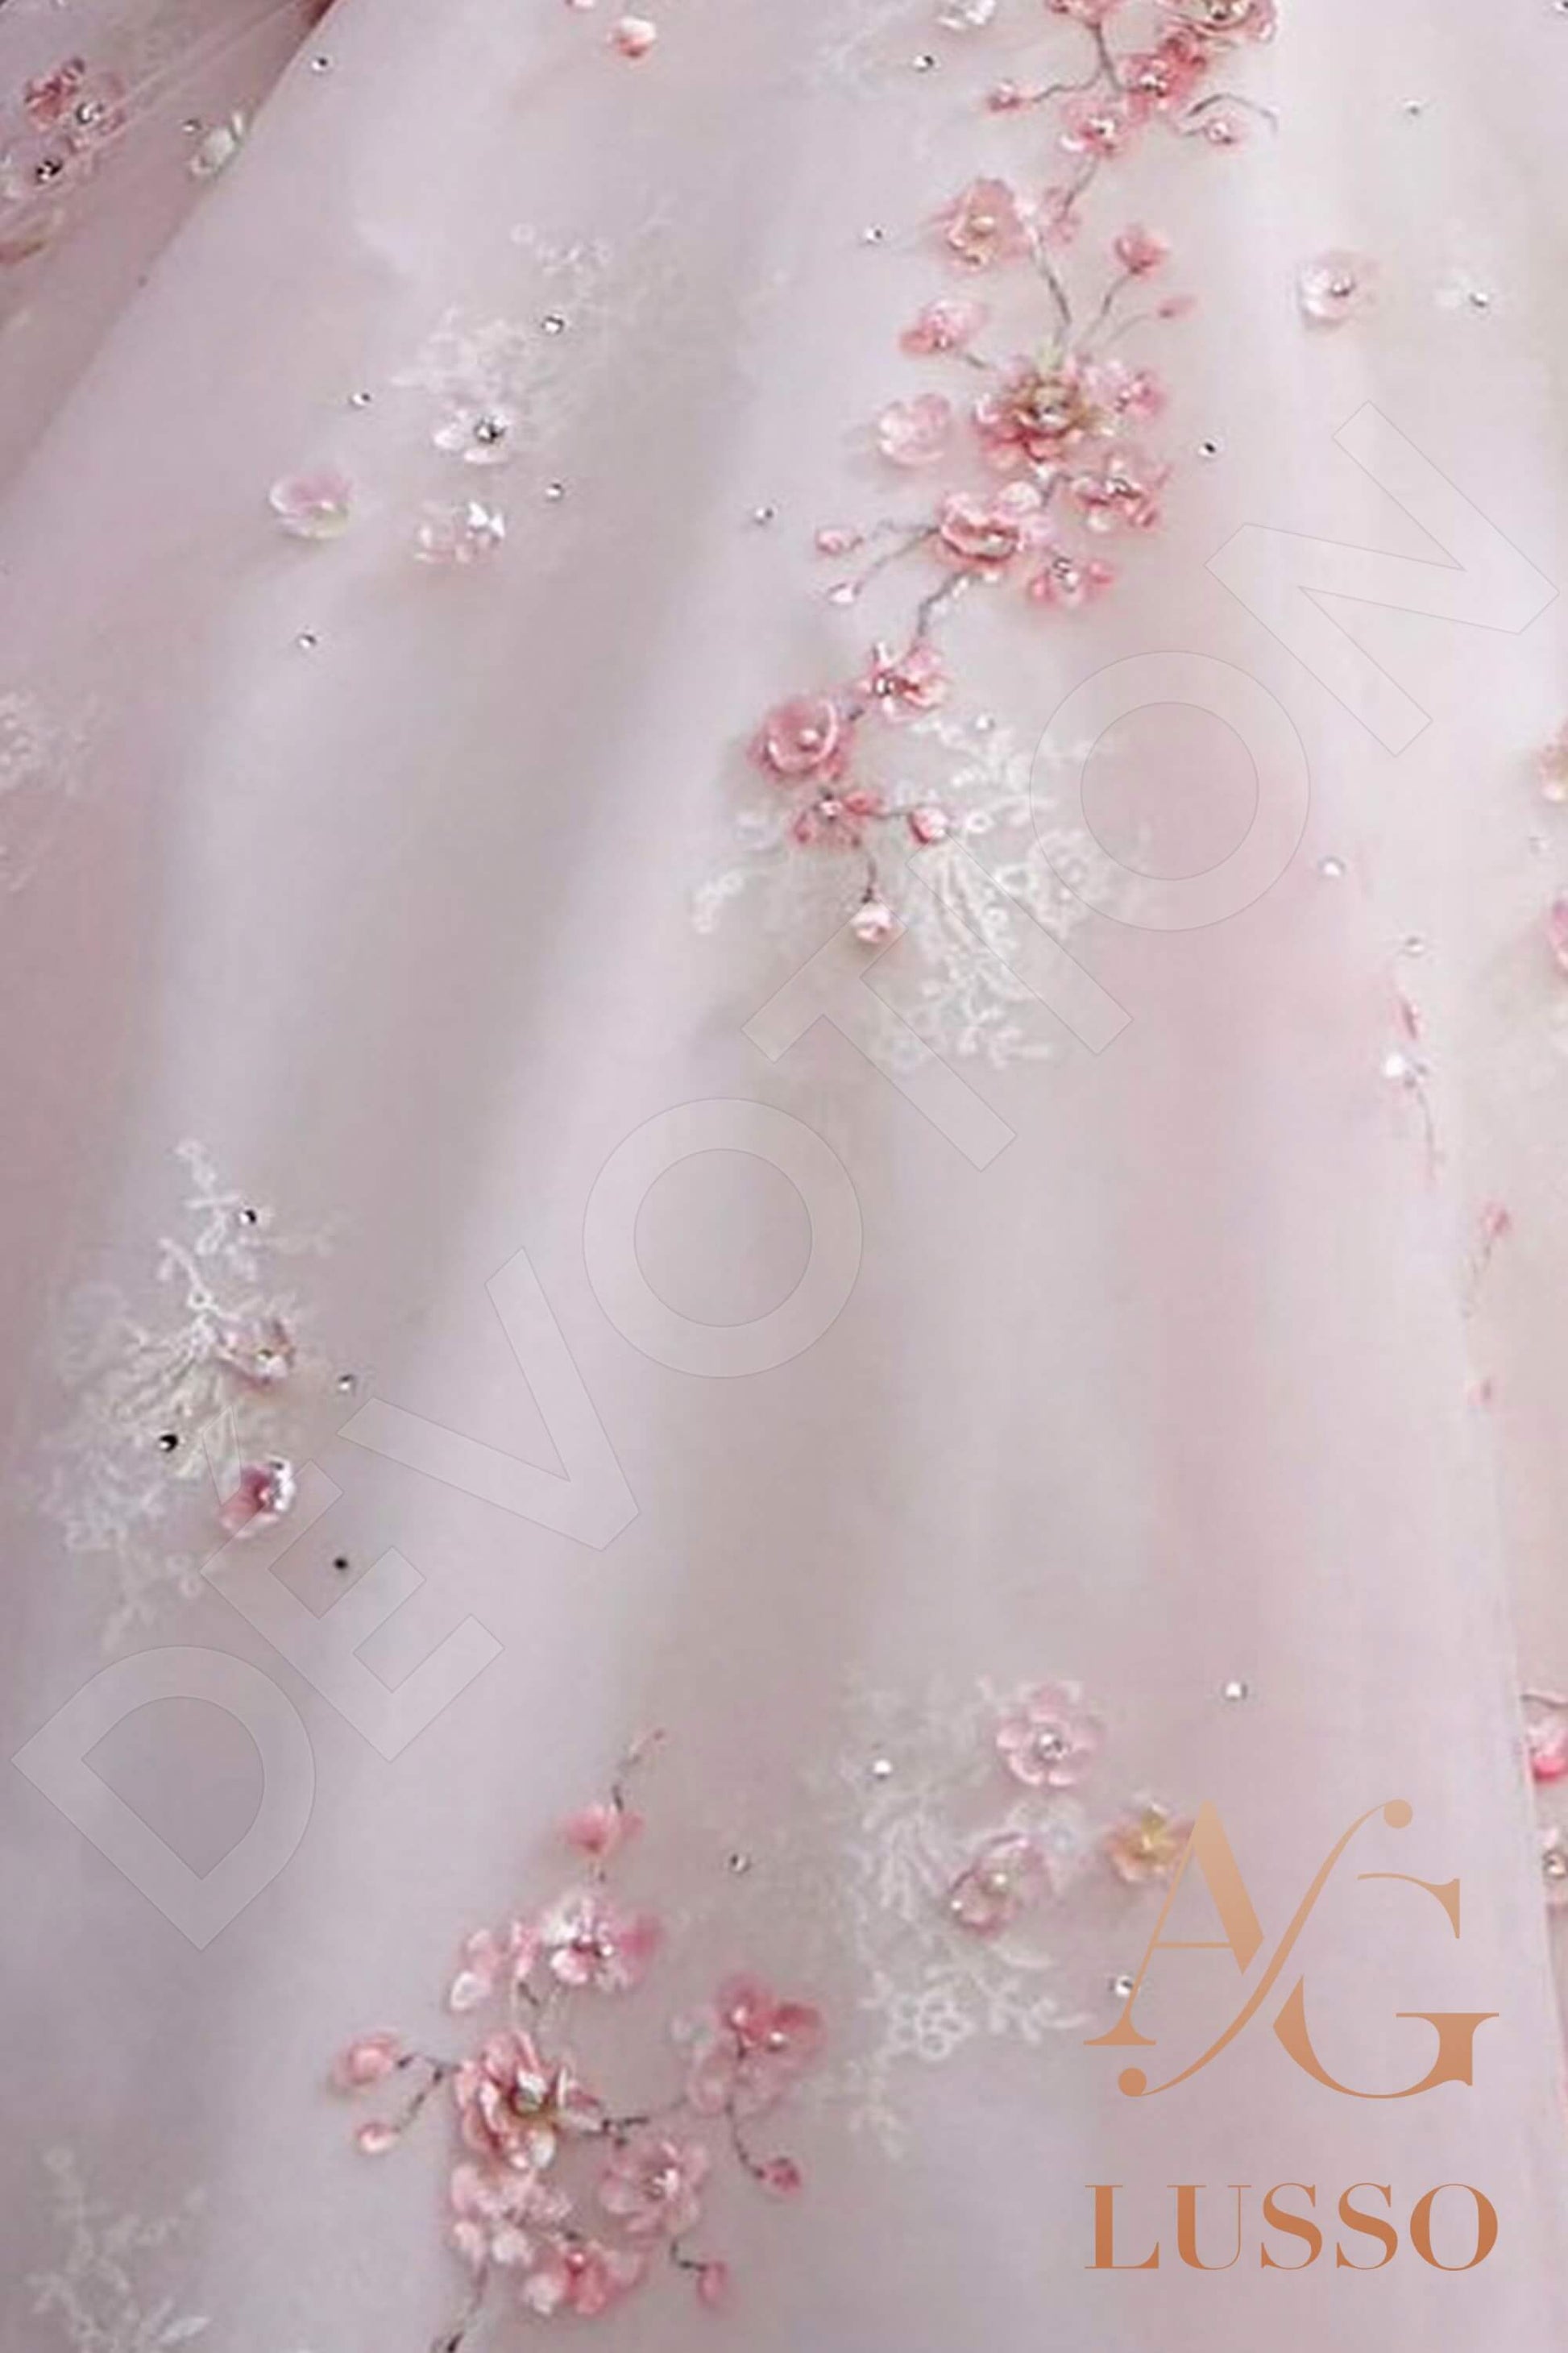 Sakura Princess/Ball Gown Sweetheart Lightpink Wedding dress